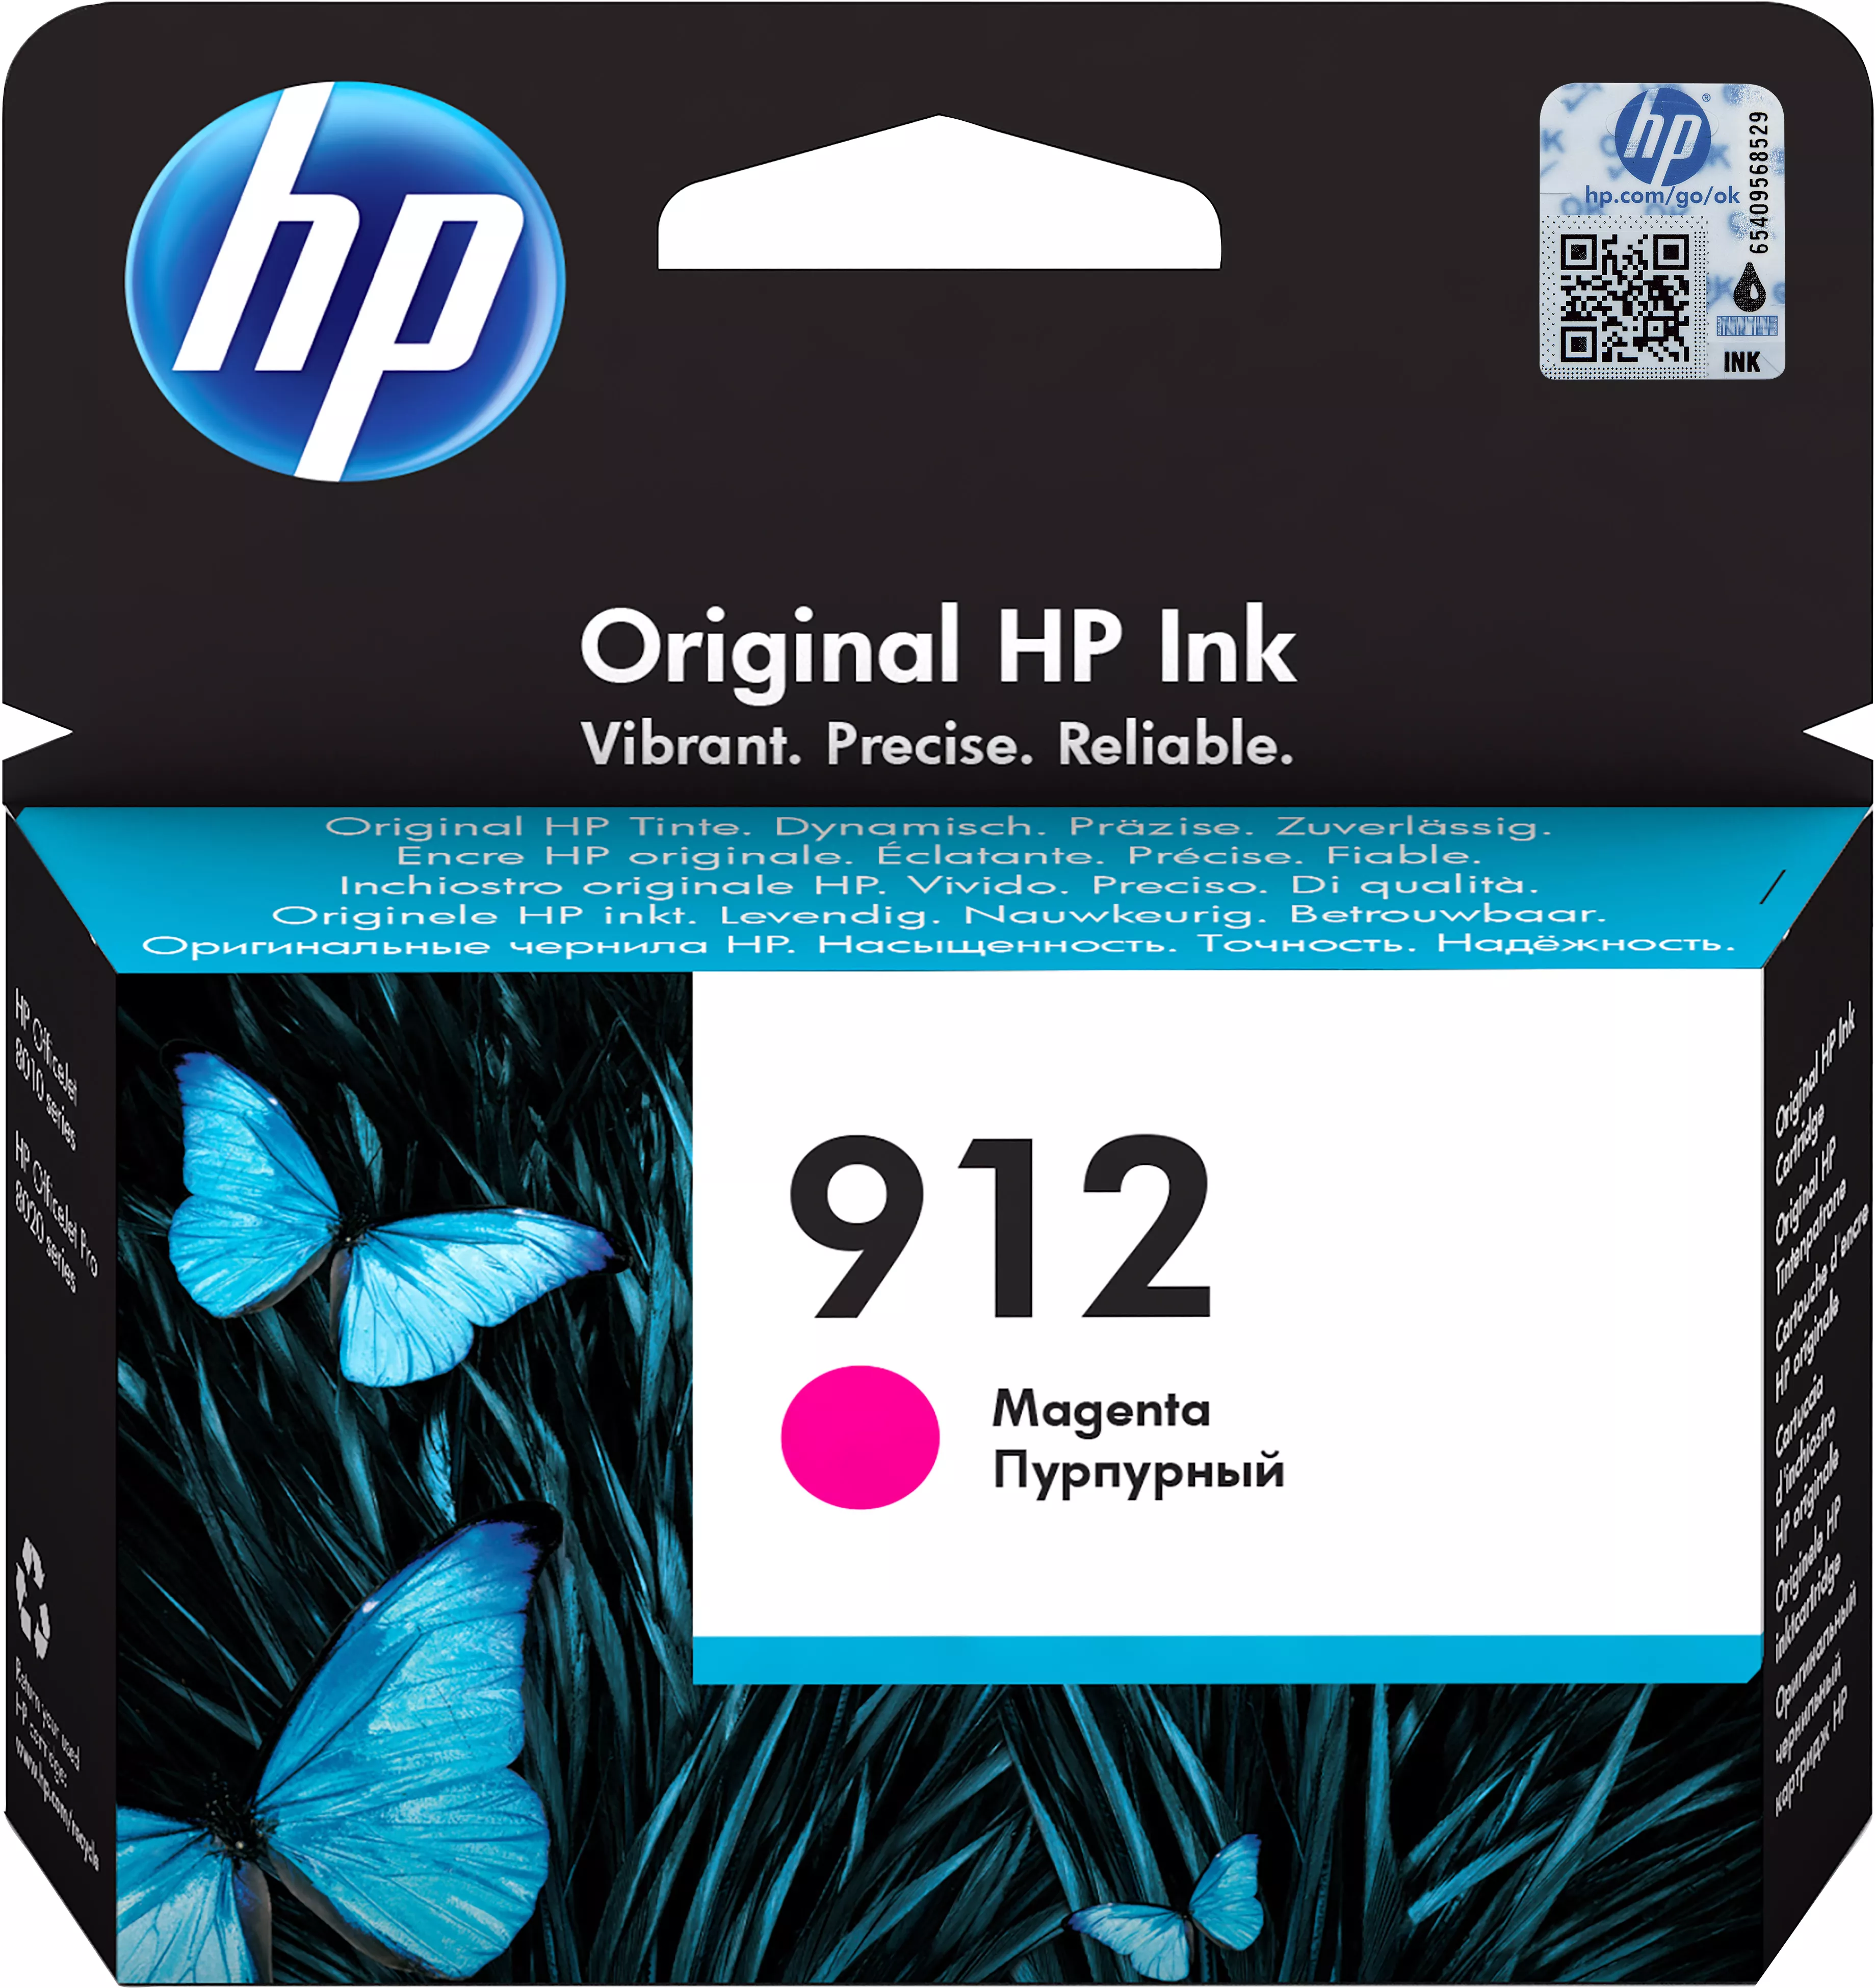 Achat HP 912 Magenta Ink Cartridge au meilleur prix